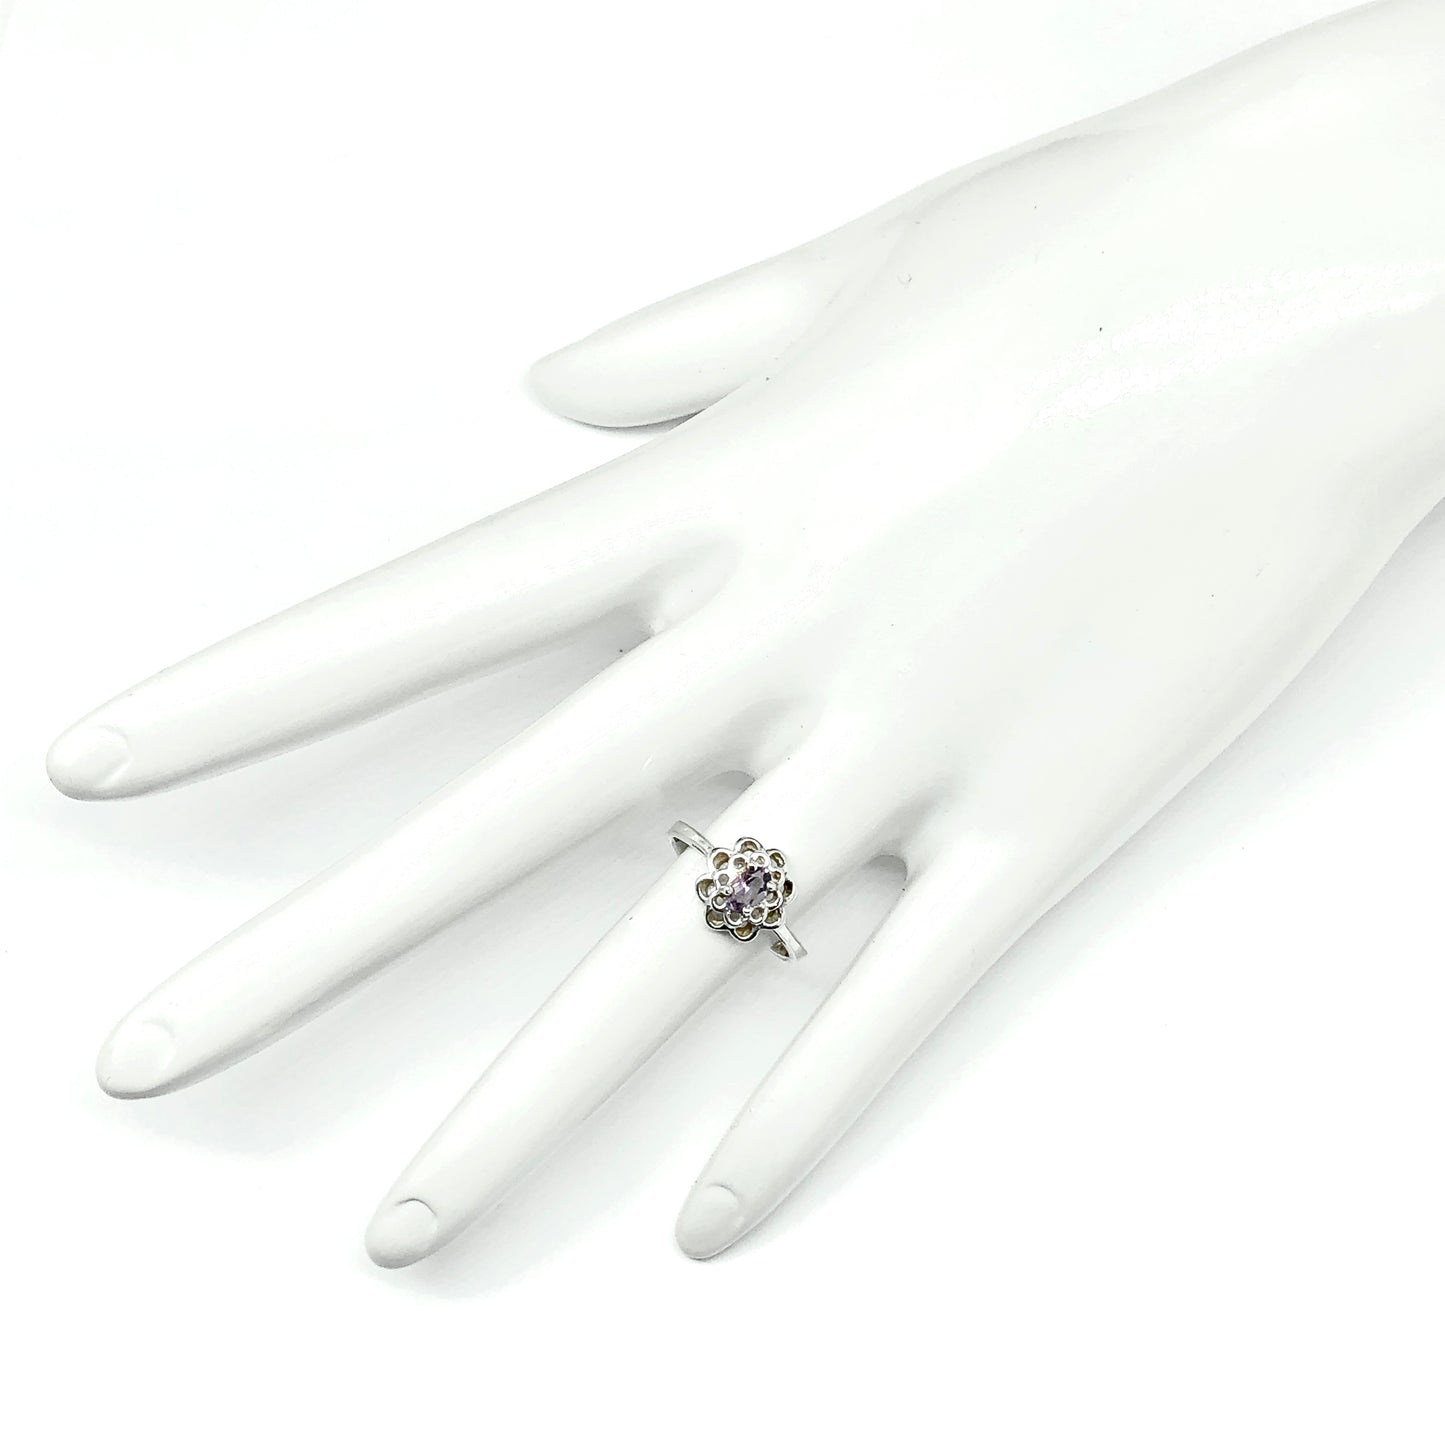 Silver Rings | Womens Petite Sterling Filigree Flower Design Amethyst Stone Ring 5 | Discount Estate Jewelry website online